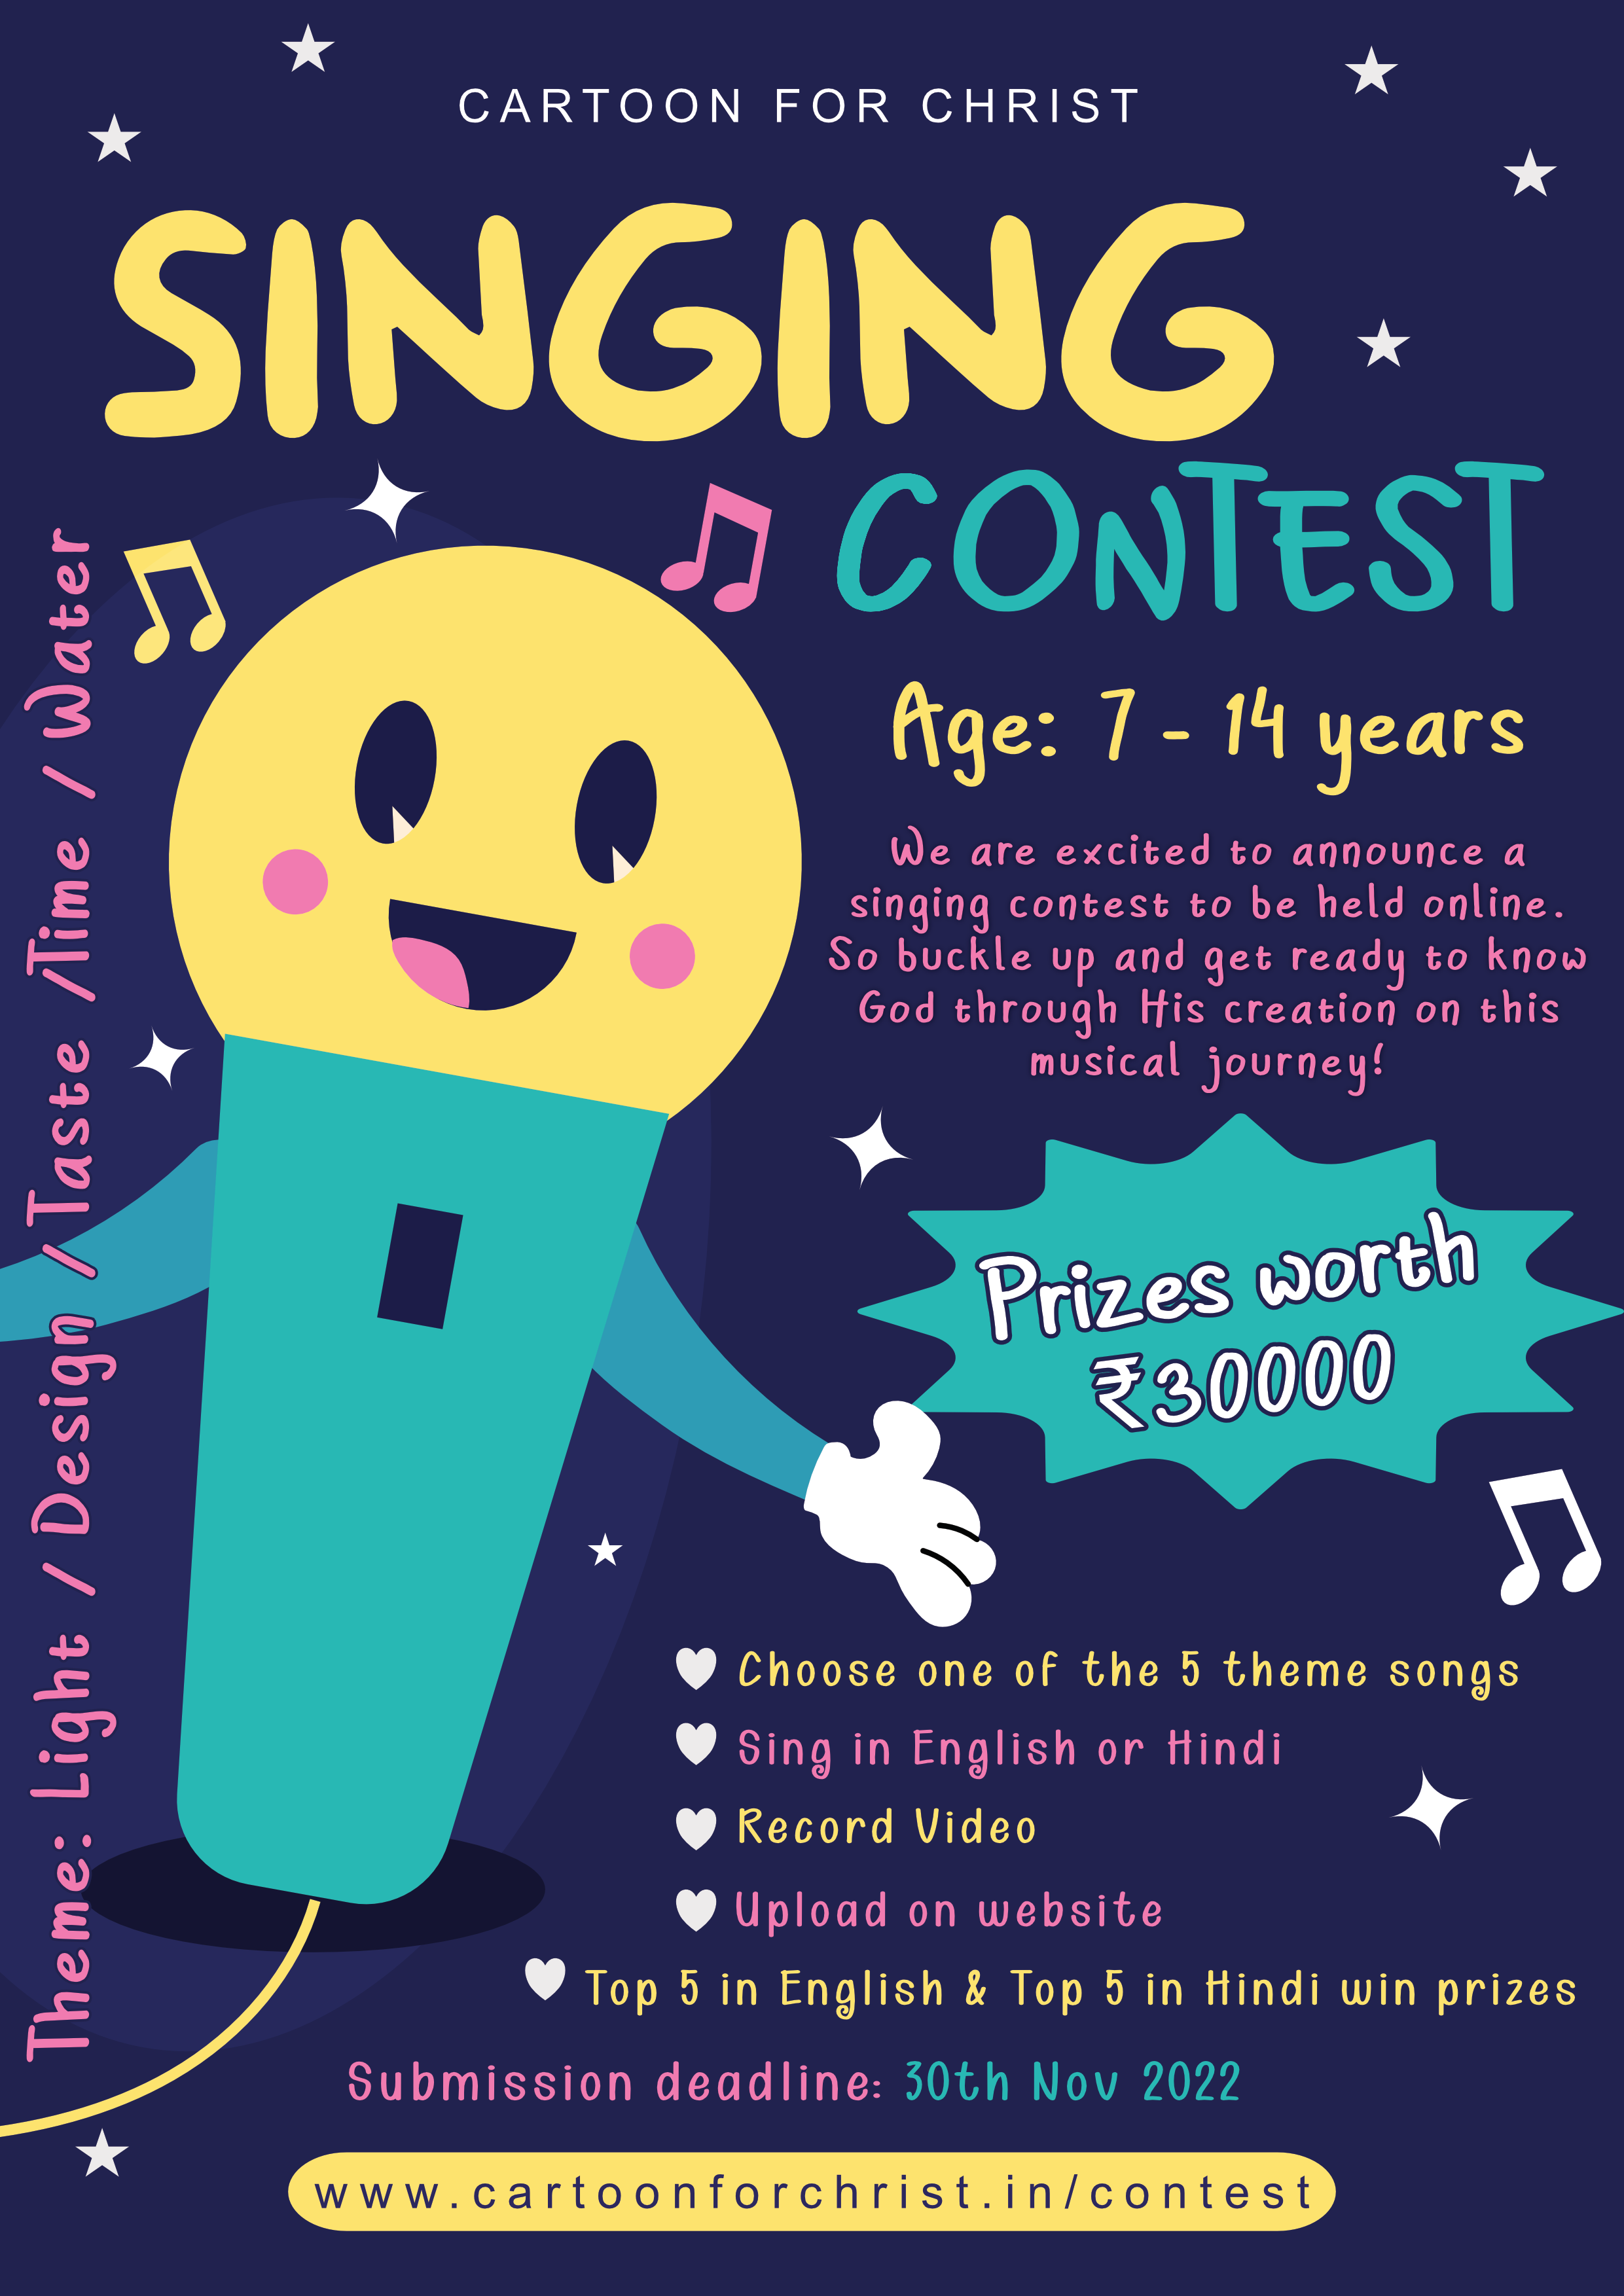 Singing contest - CARTOON FOR CHRIST